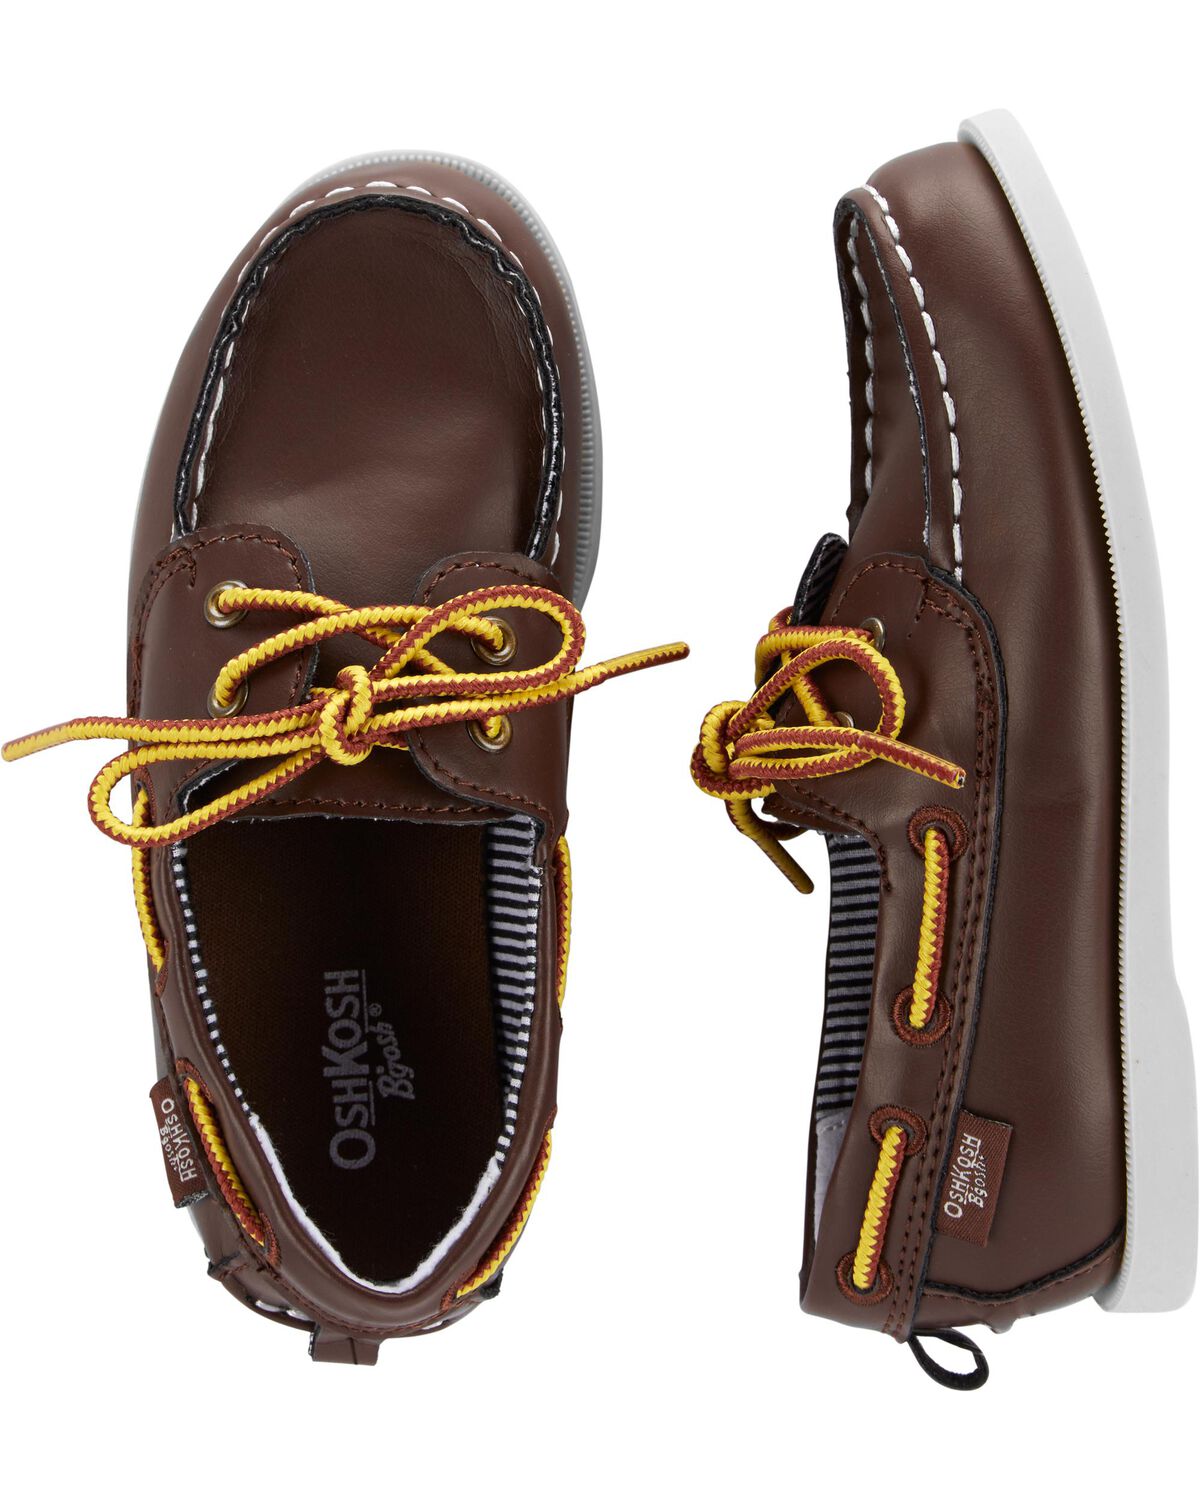 Brown Toddler OshKosh Boat Shoes | carters.com